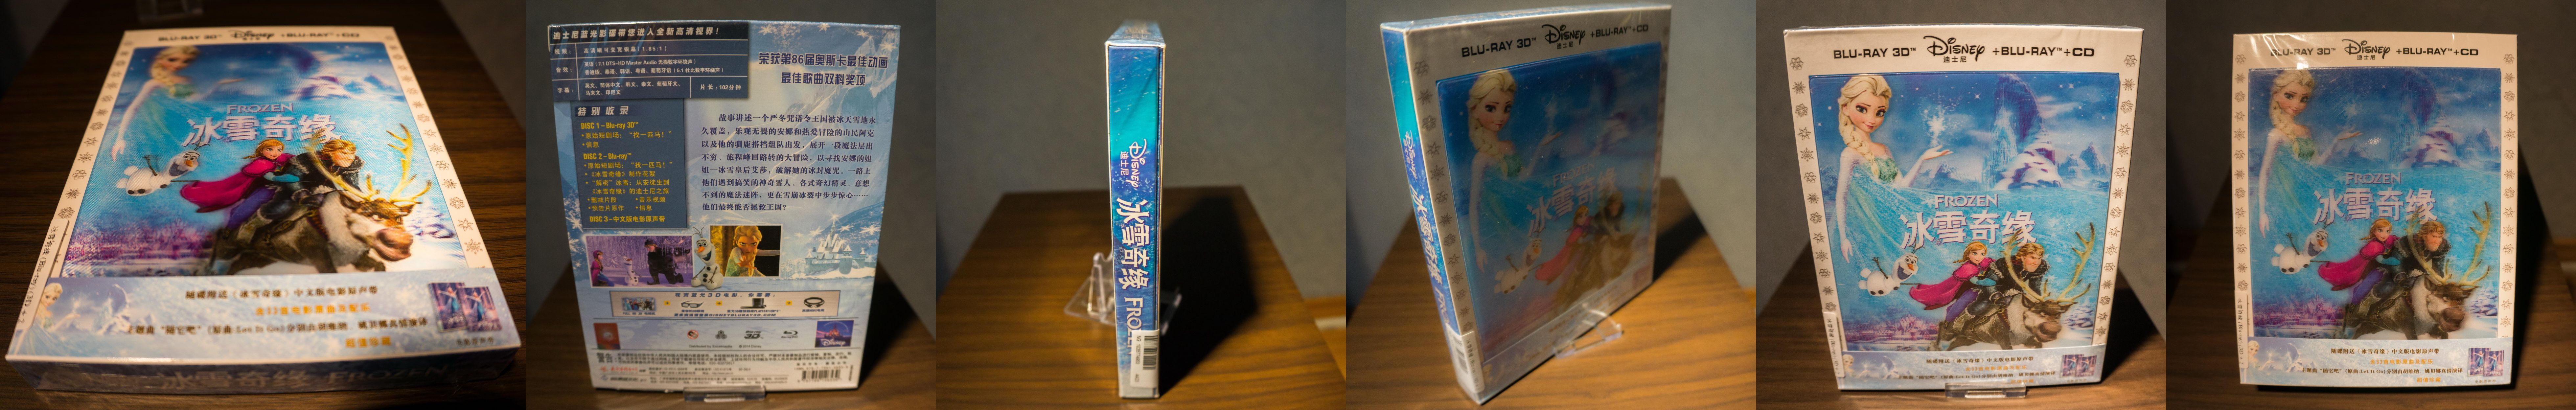 Frozen Digipack Lenticular Bluray China Slipcover